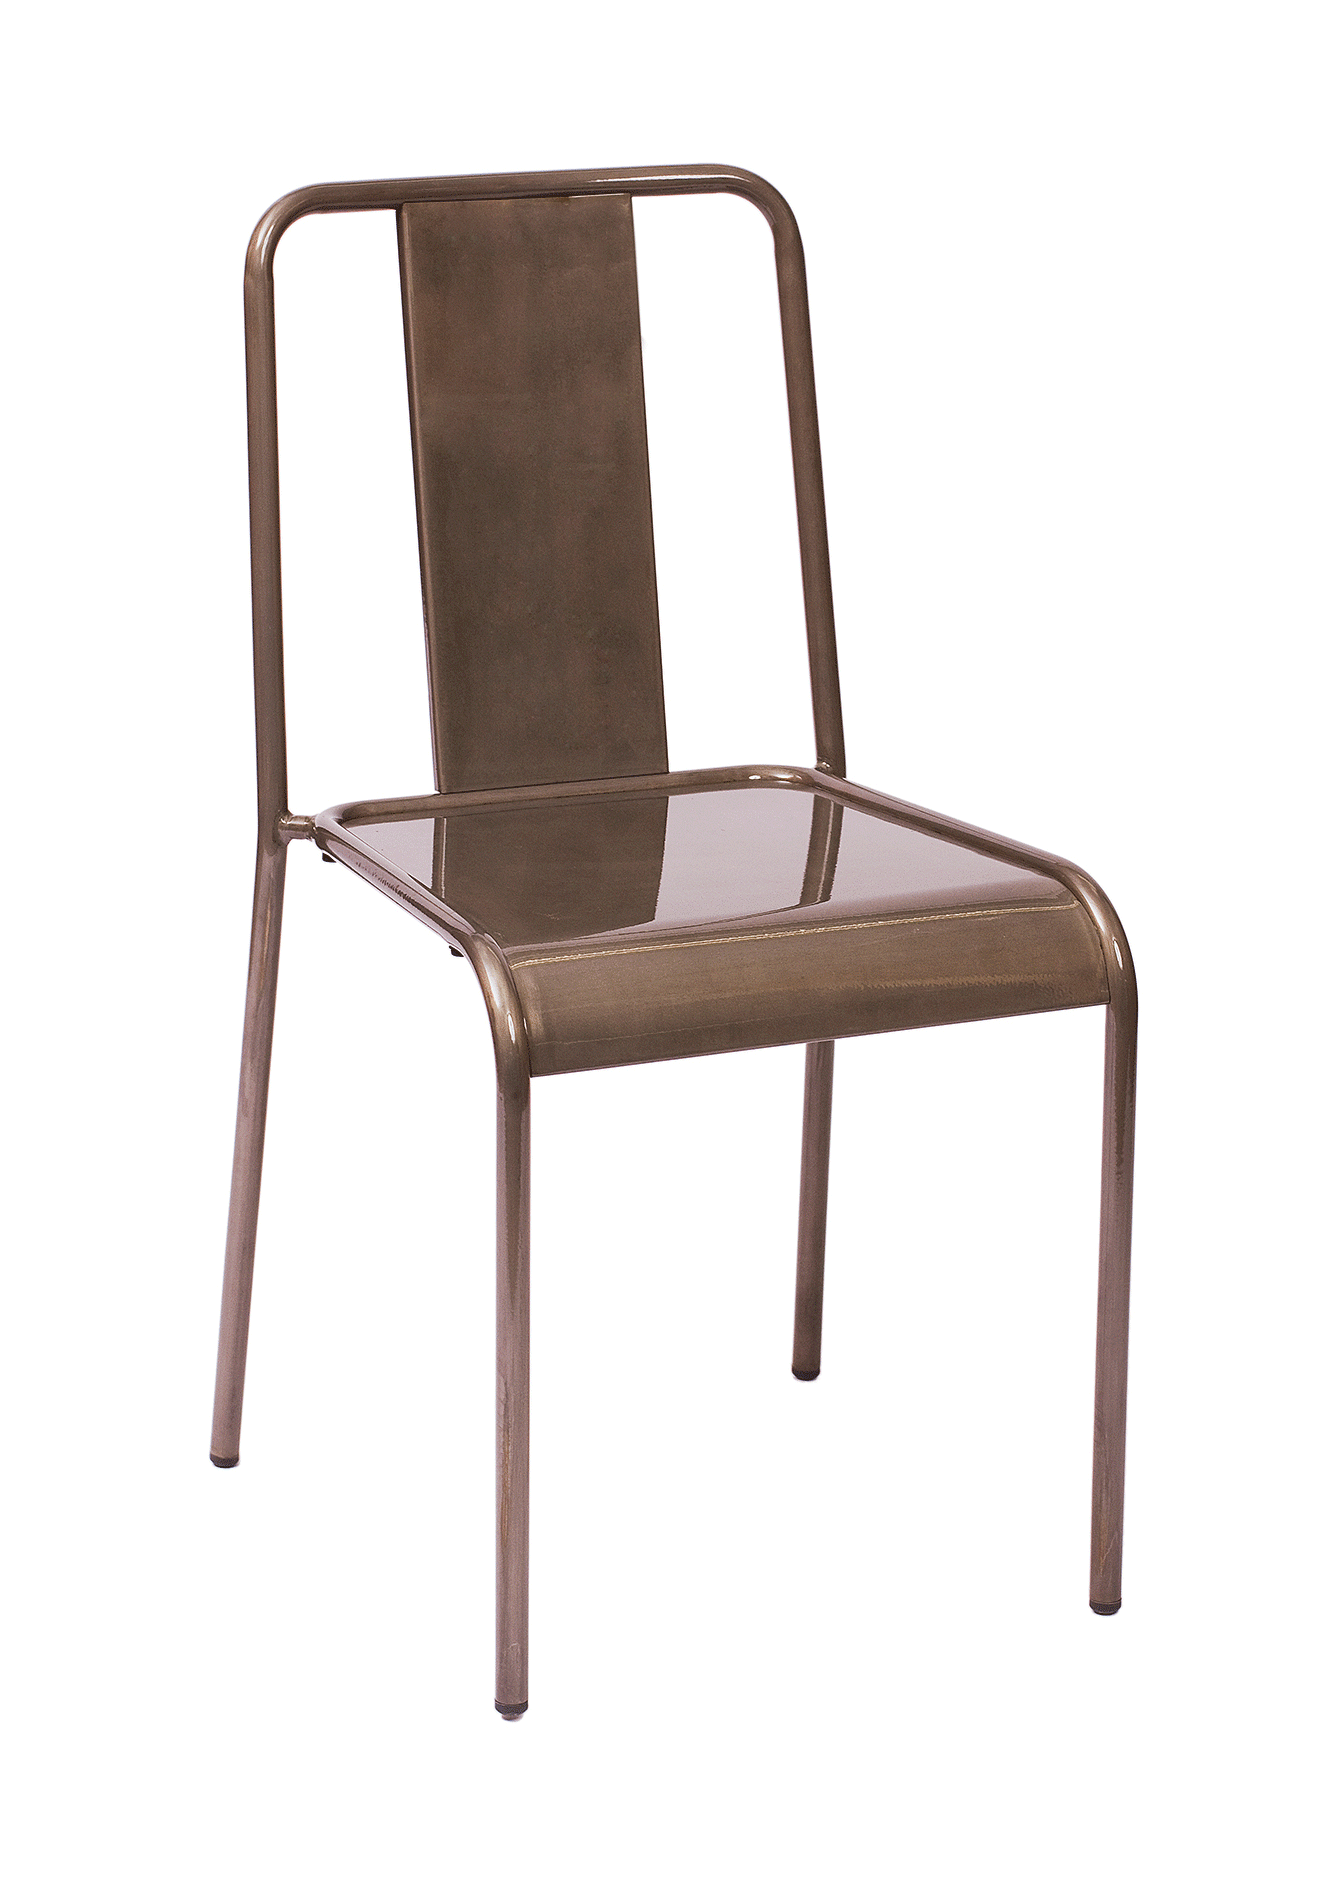 Indoor Chairs Bfm Tara Clear Coated Steel Indoor Restaurant Chair